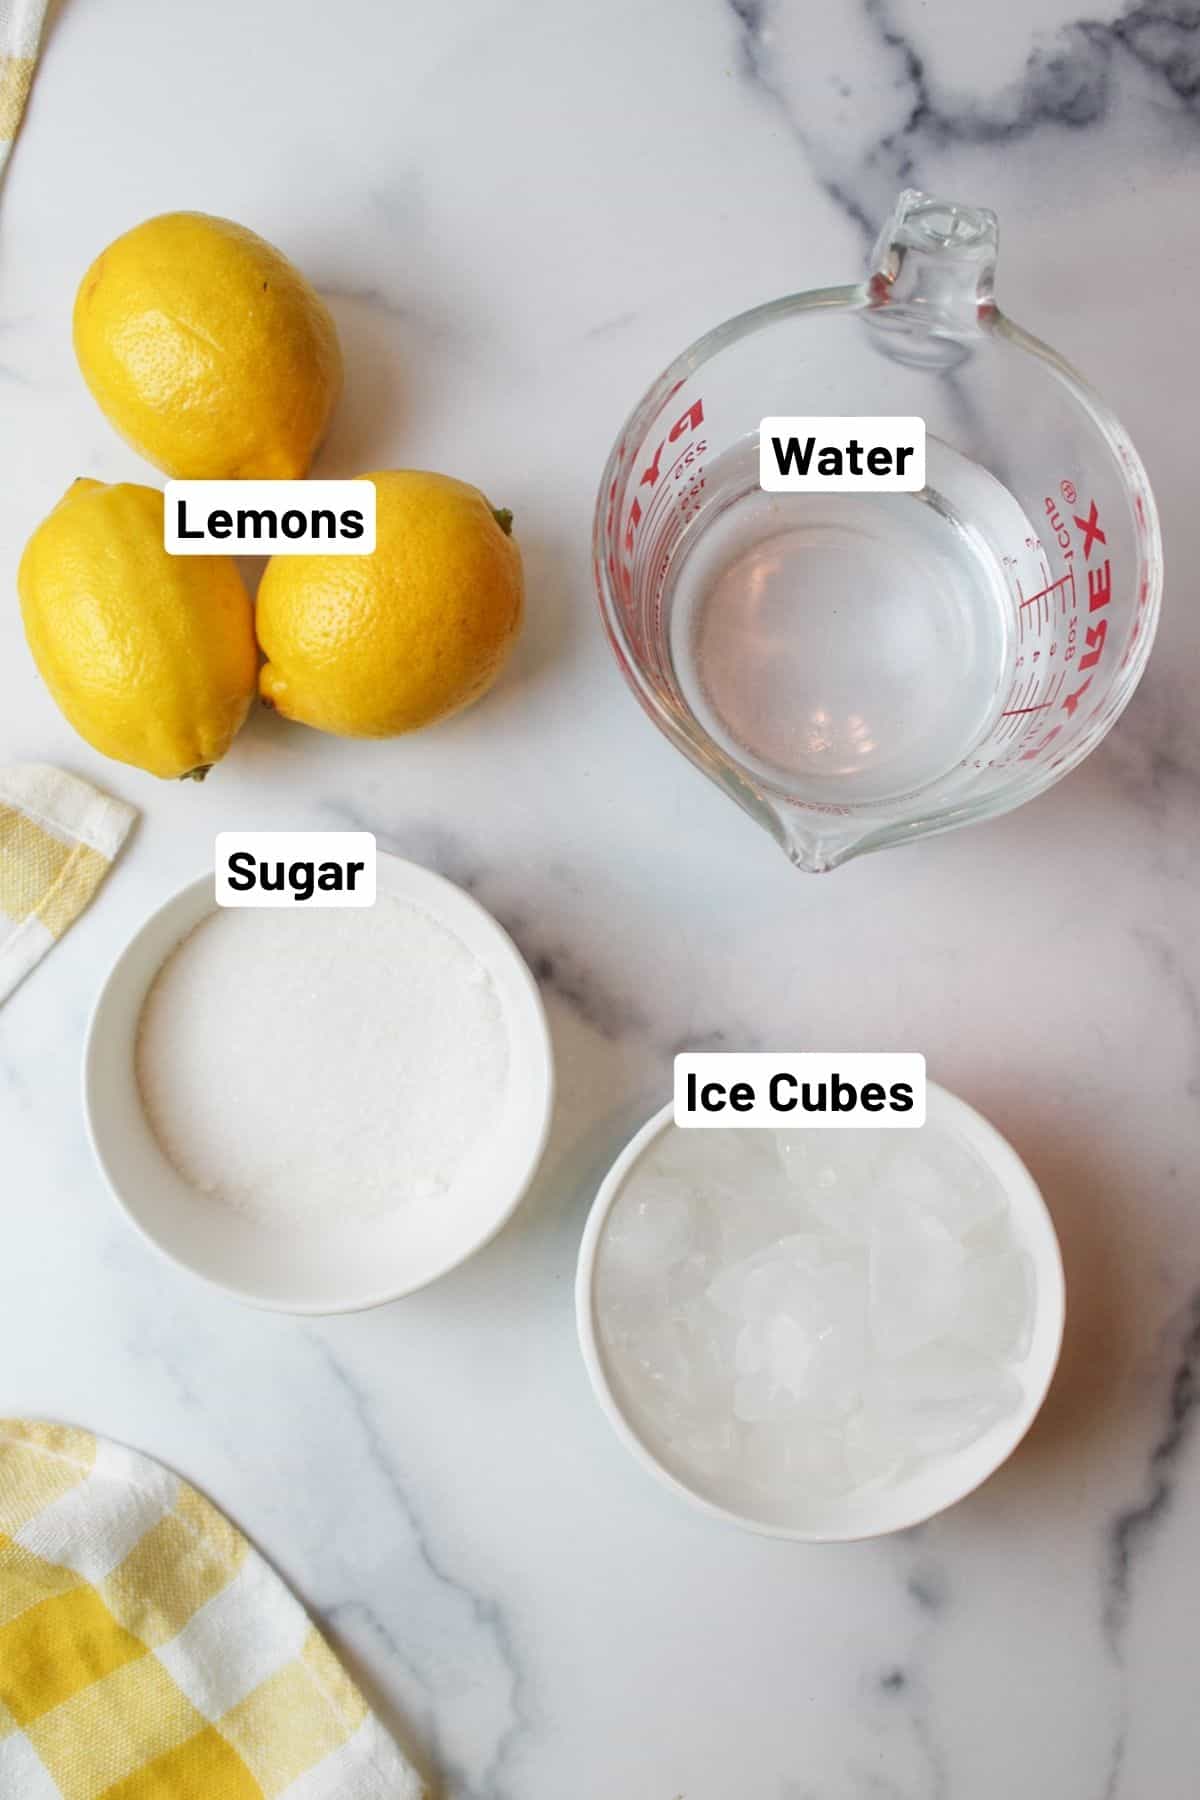 labeled ingredients needed to make single serving lemonade